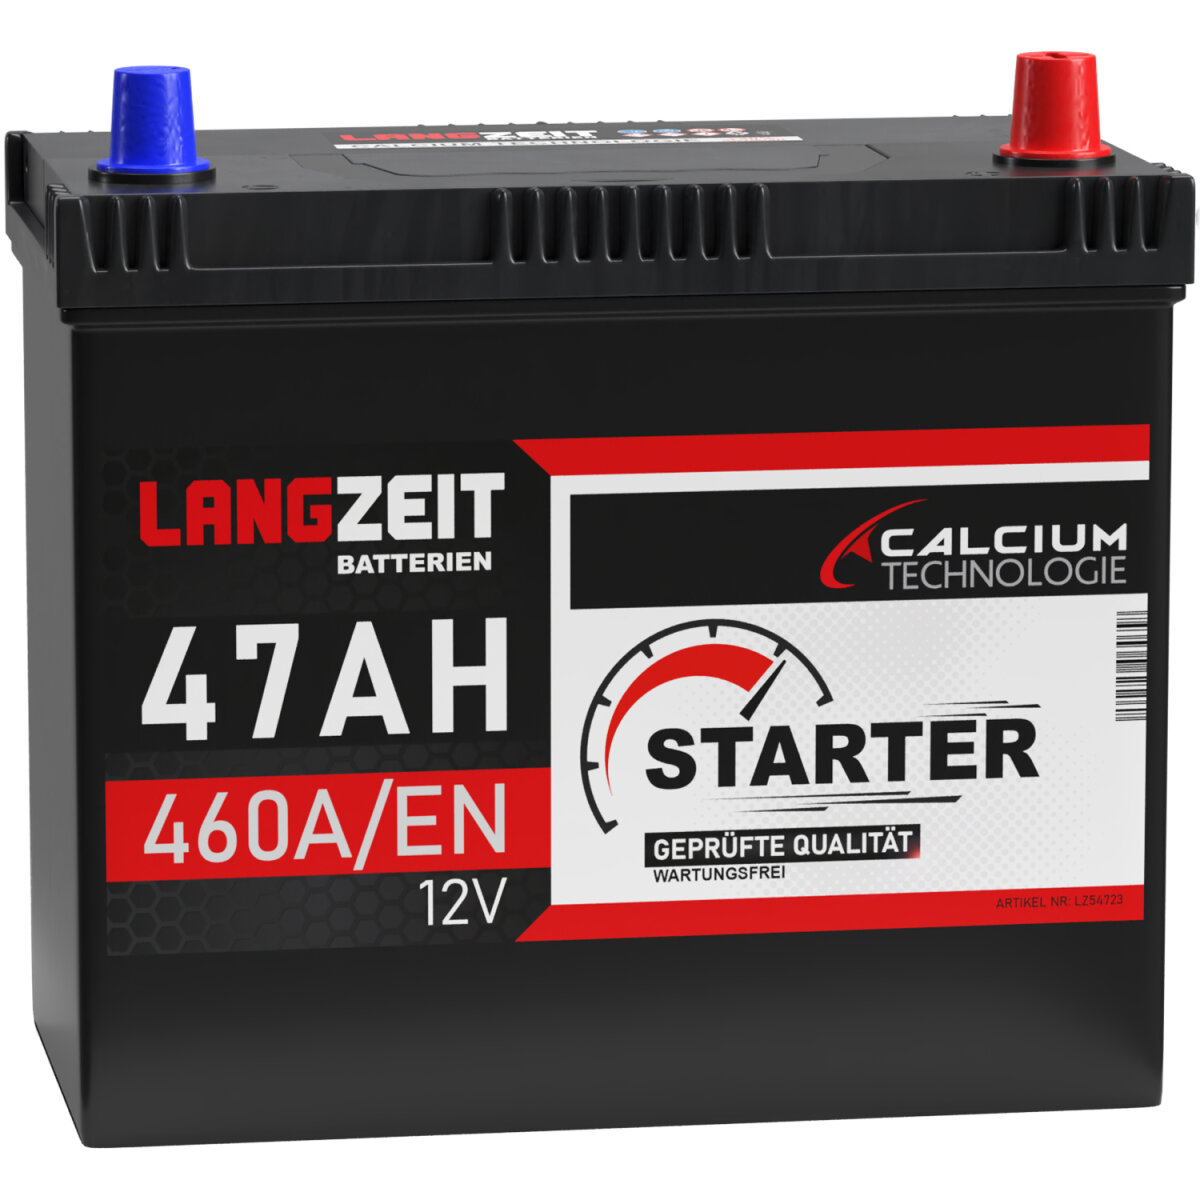 https://www.langzeitbatterien.de/media/image/product/1634/lg/langzeit-asia-autobatterie-ppr-47ah-12v.jpg